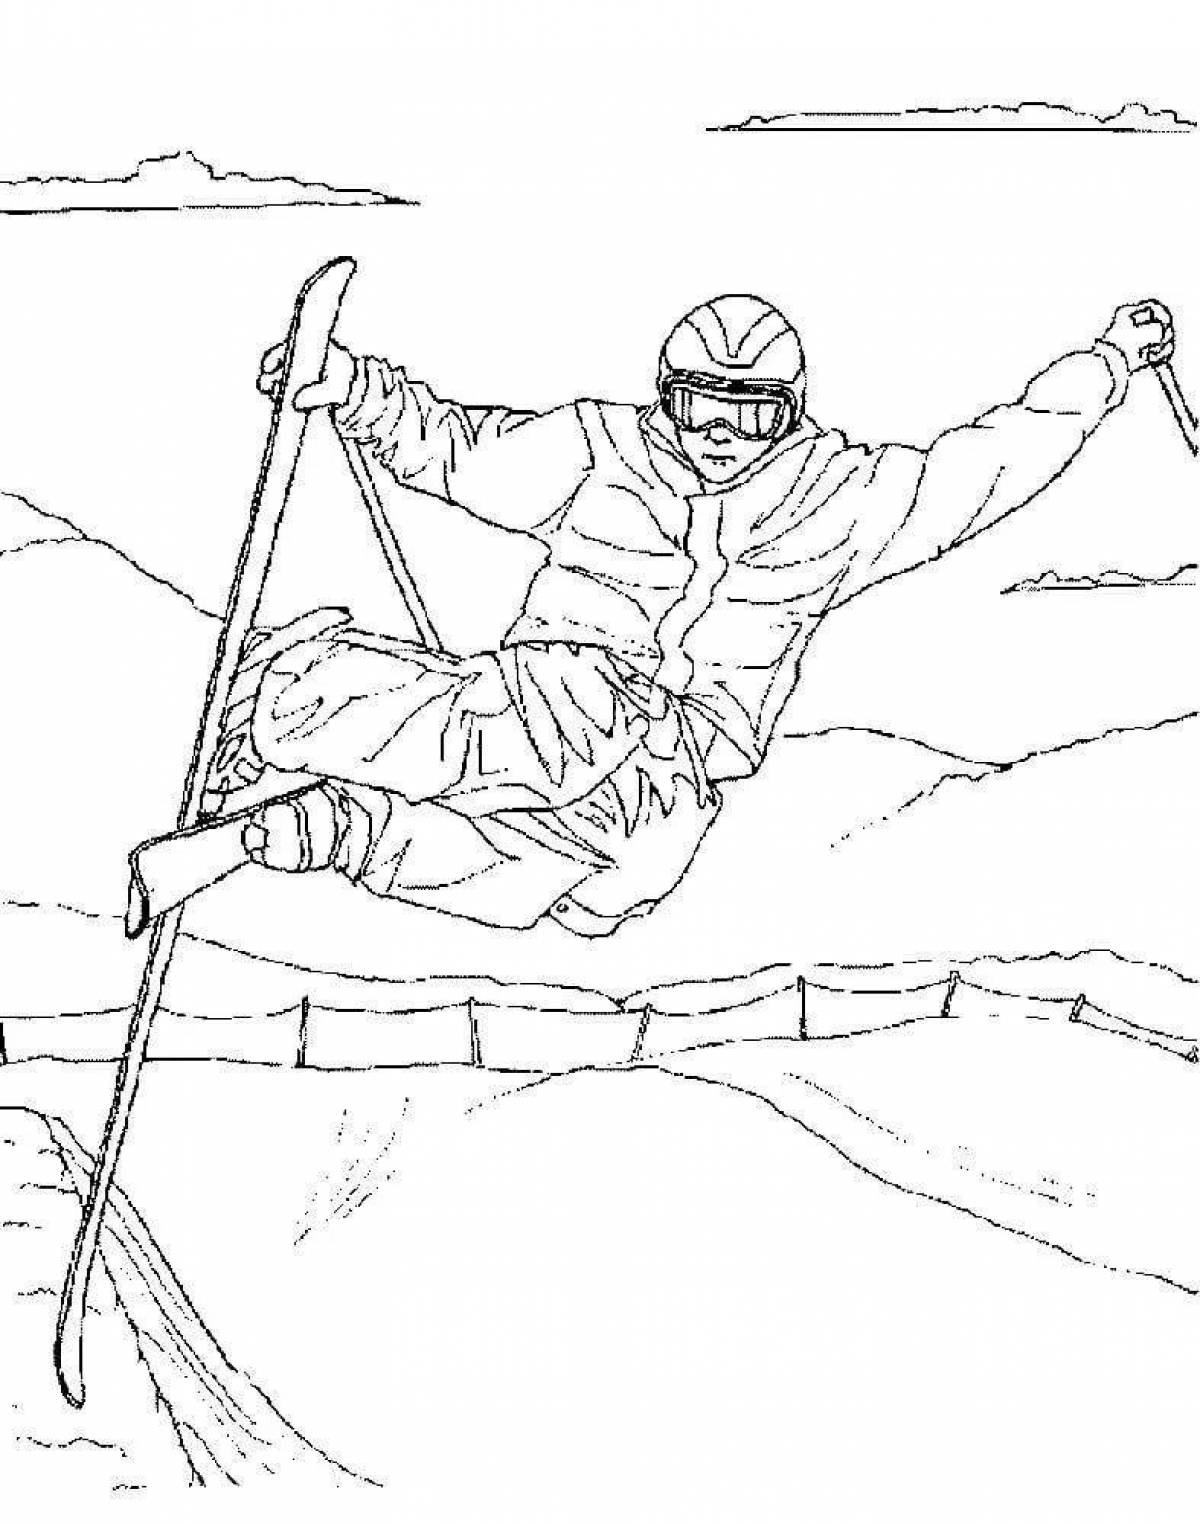 Brave man on skis